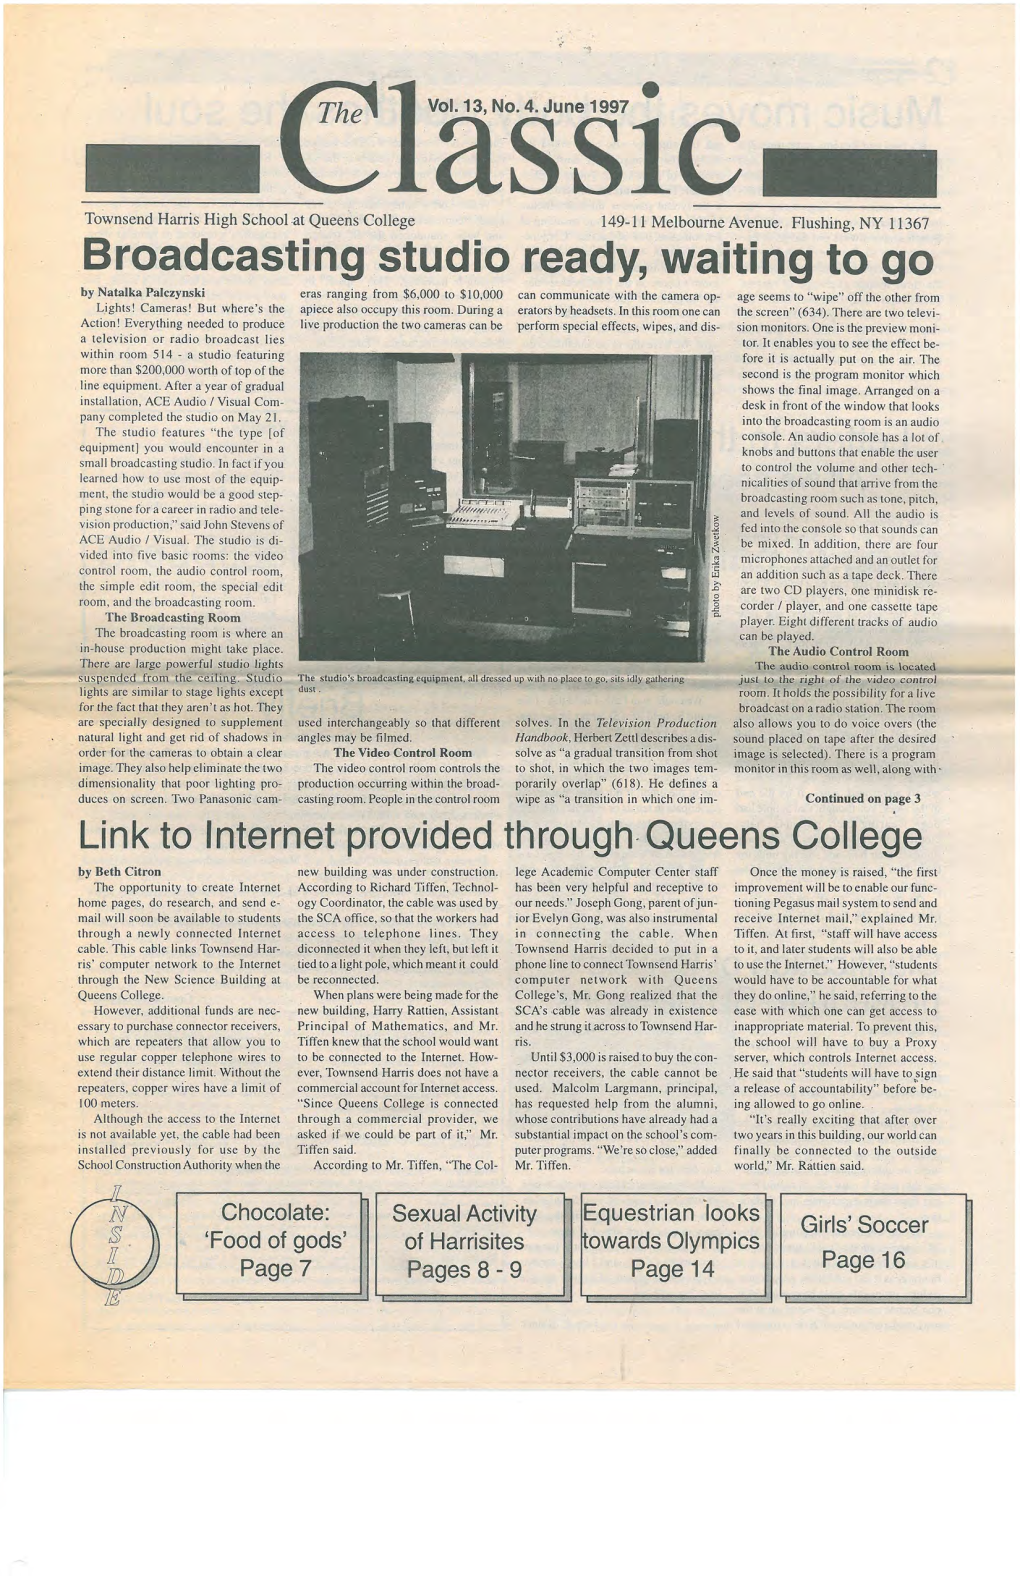 June 1997 • Asstc Townsend Harris High School.At Queens College 149-11 Melbourne Avenue